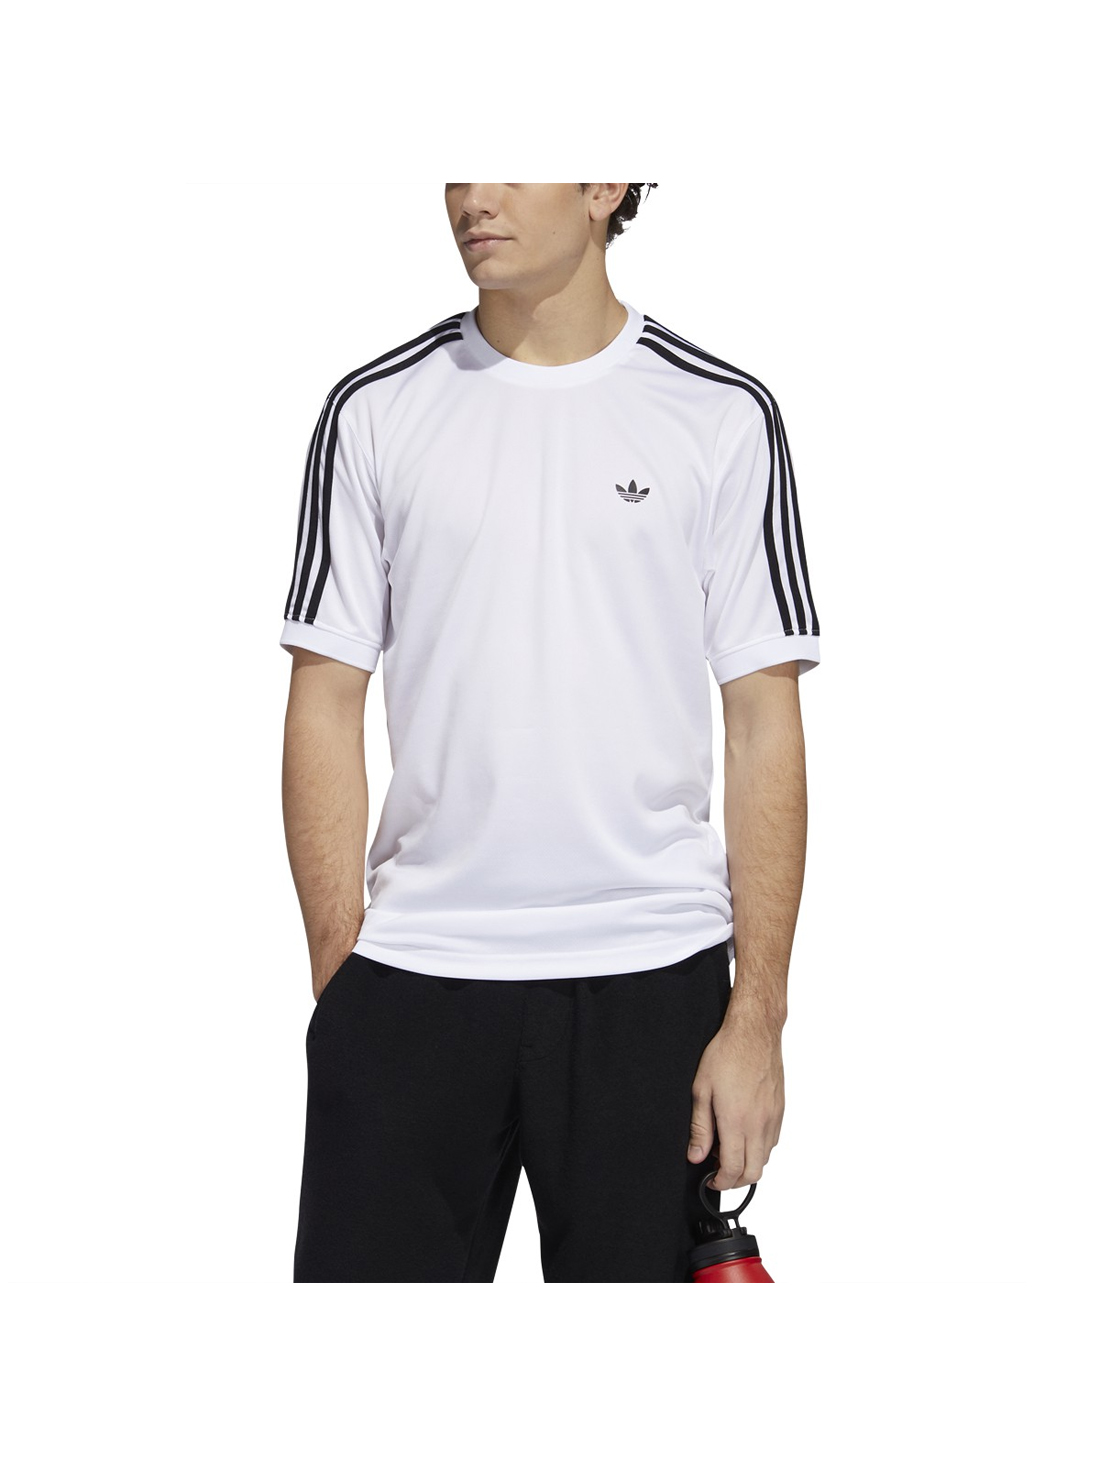 Adidas Aero Club Jersey - White / Black - WeAreCivil.com